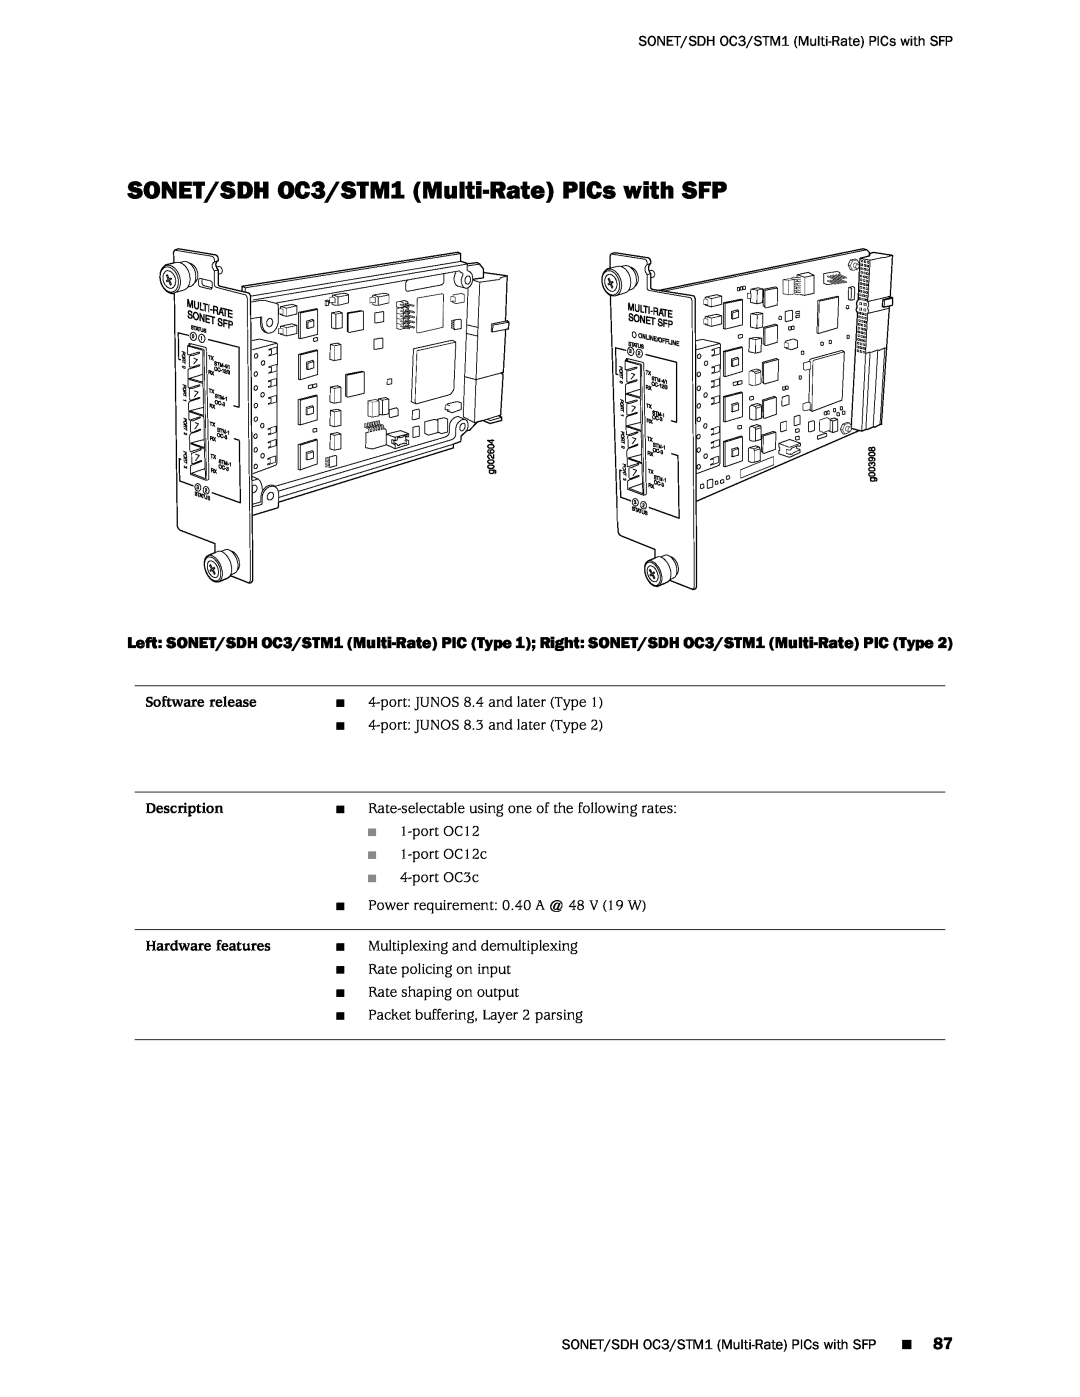 Juniper Networks M120 manual SONET/SDH OC3/STM1 Multi-Rate PICs with SFP, Por T 